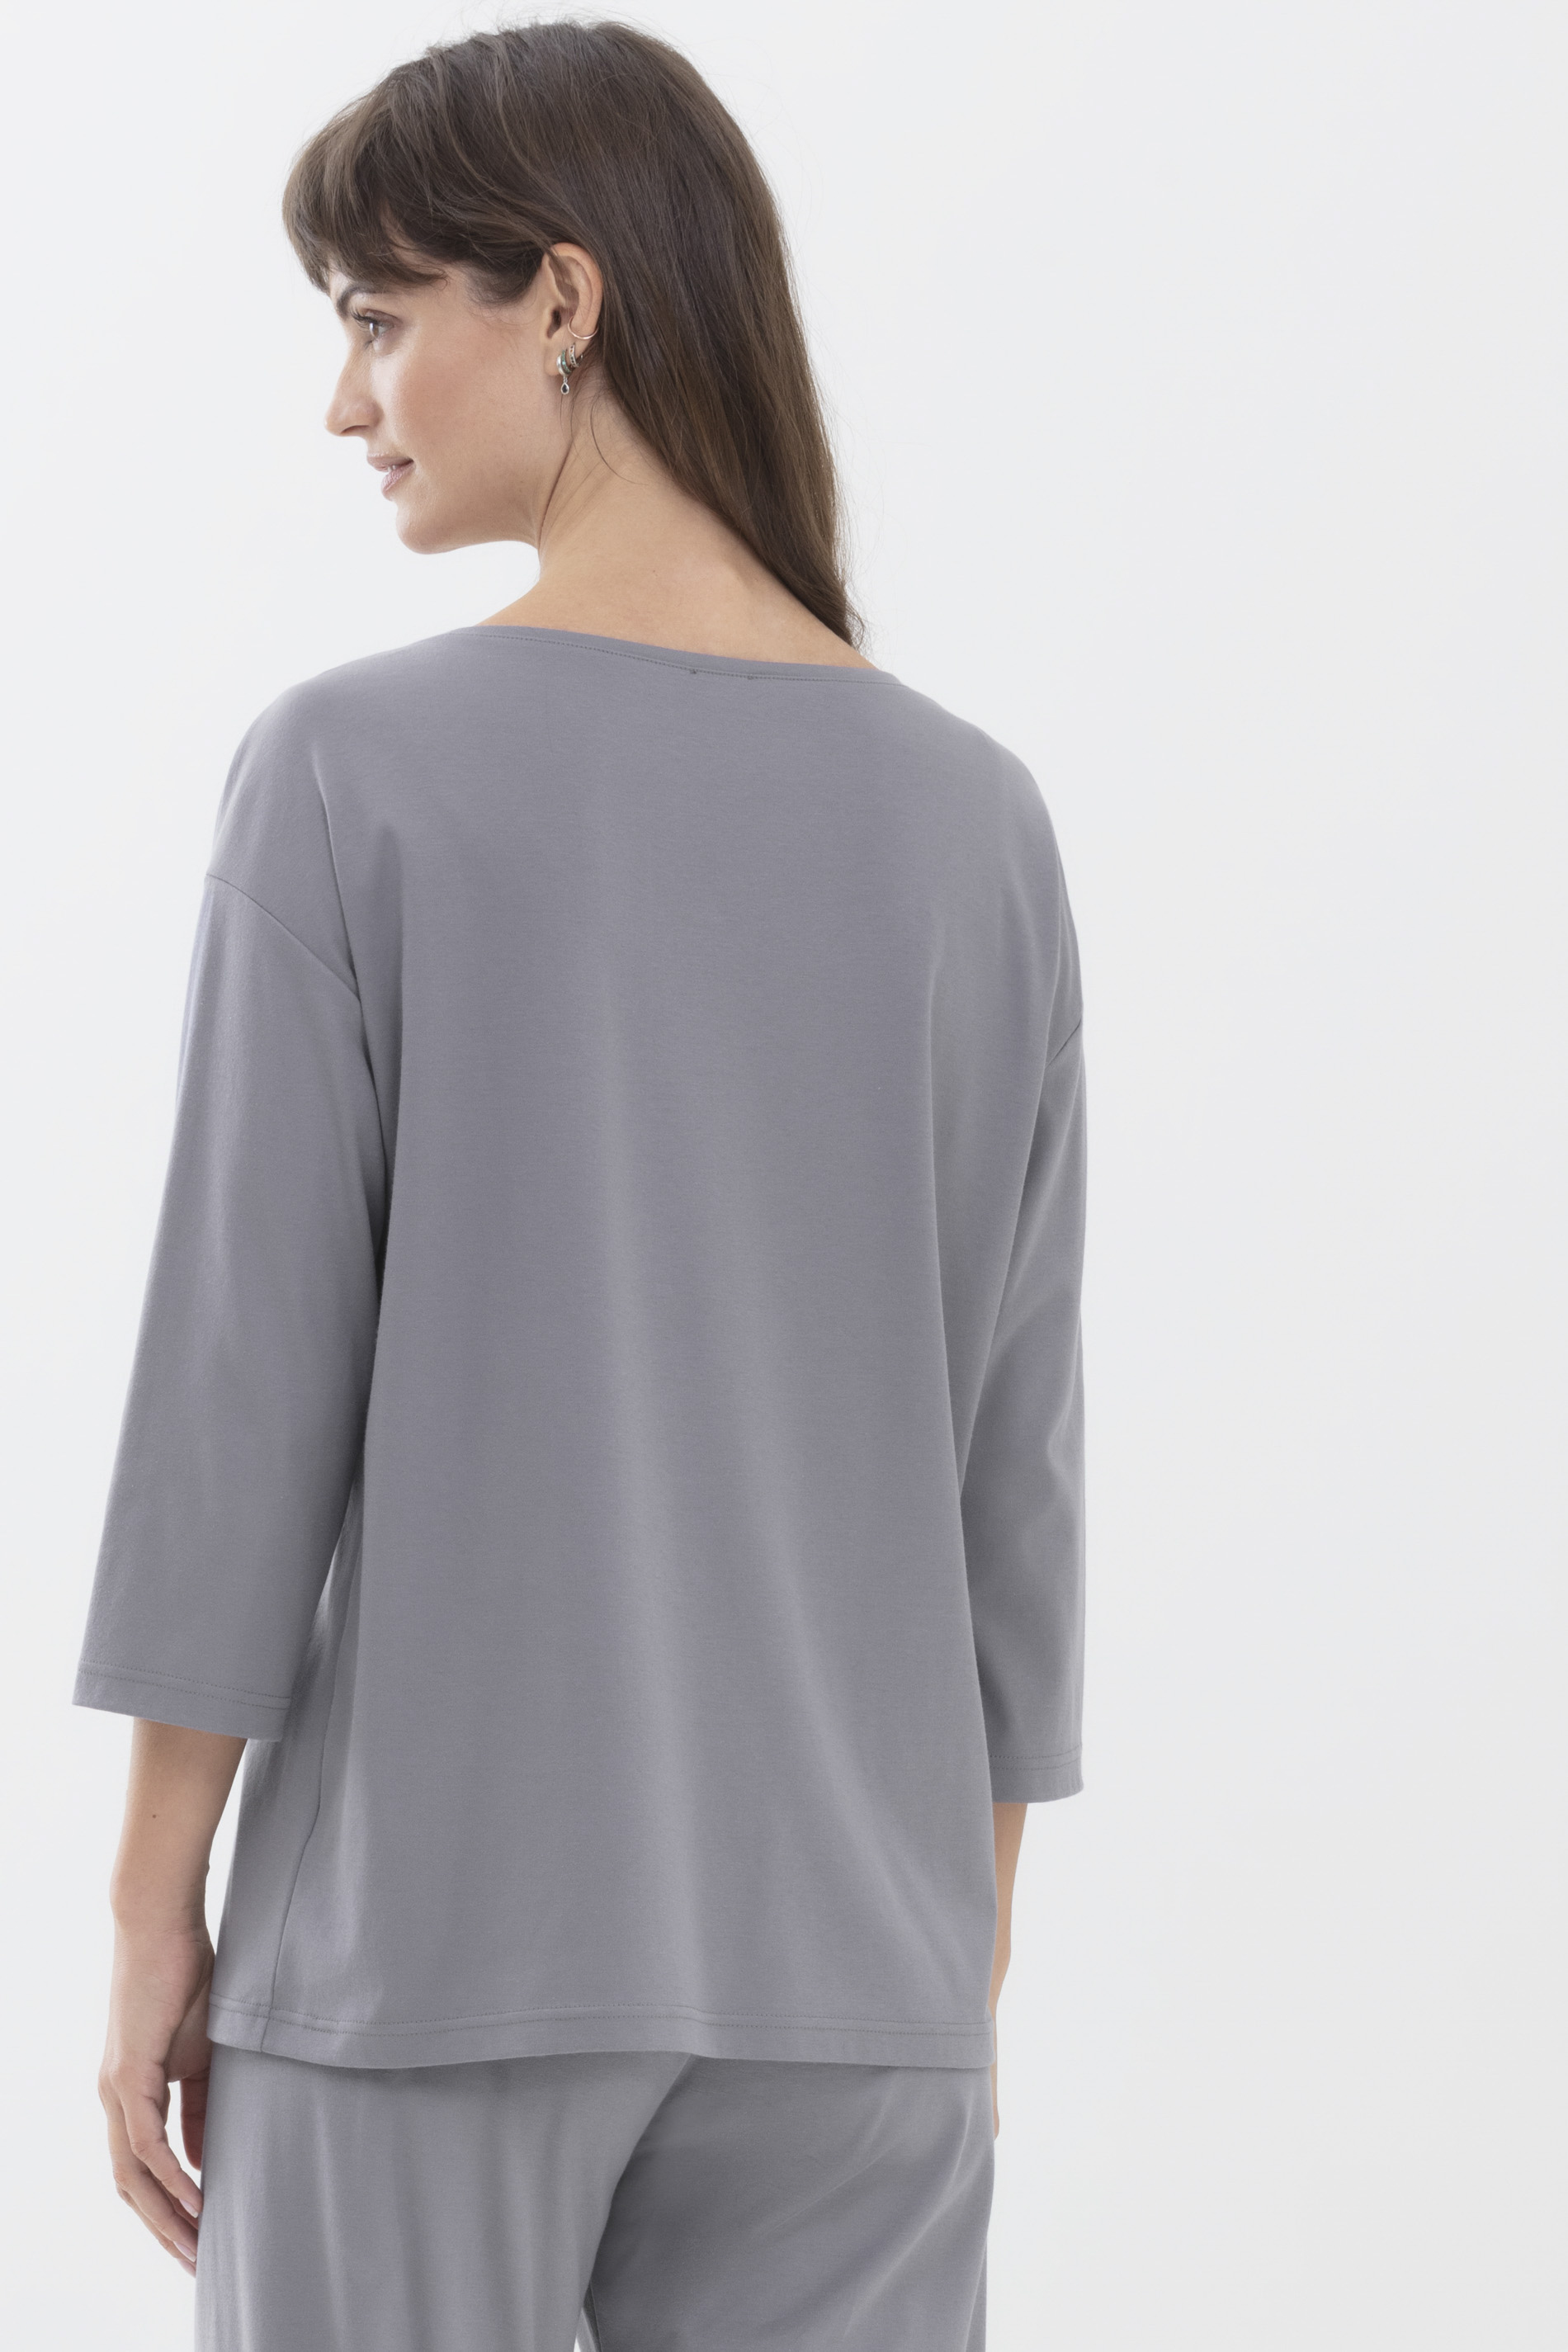 Shirt Lovely Grey Serie Sleepsation Rear View | mey®